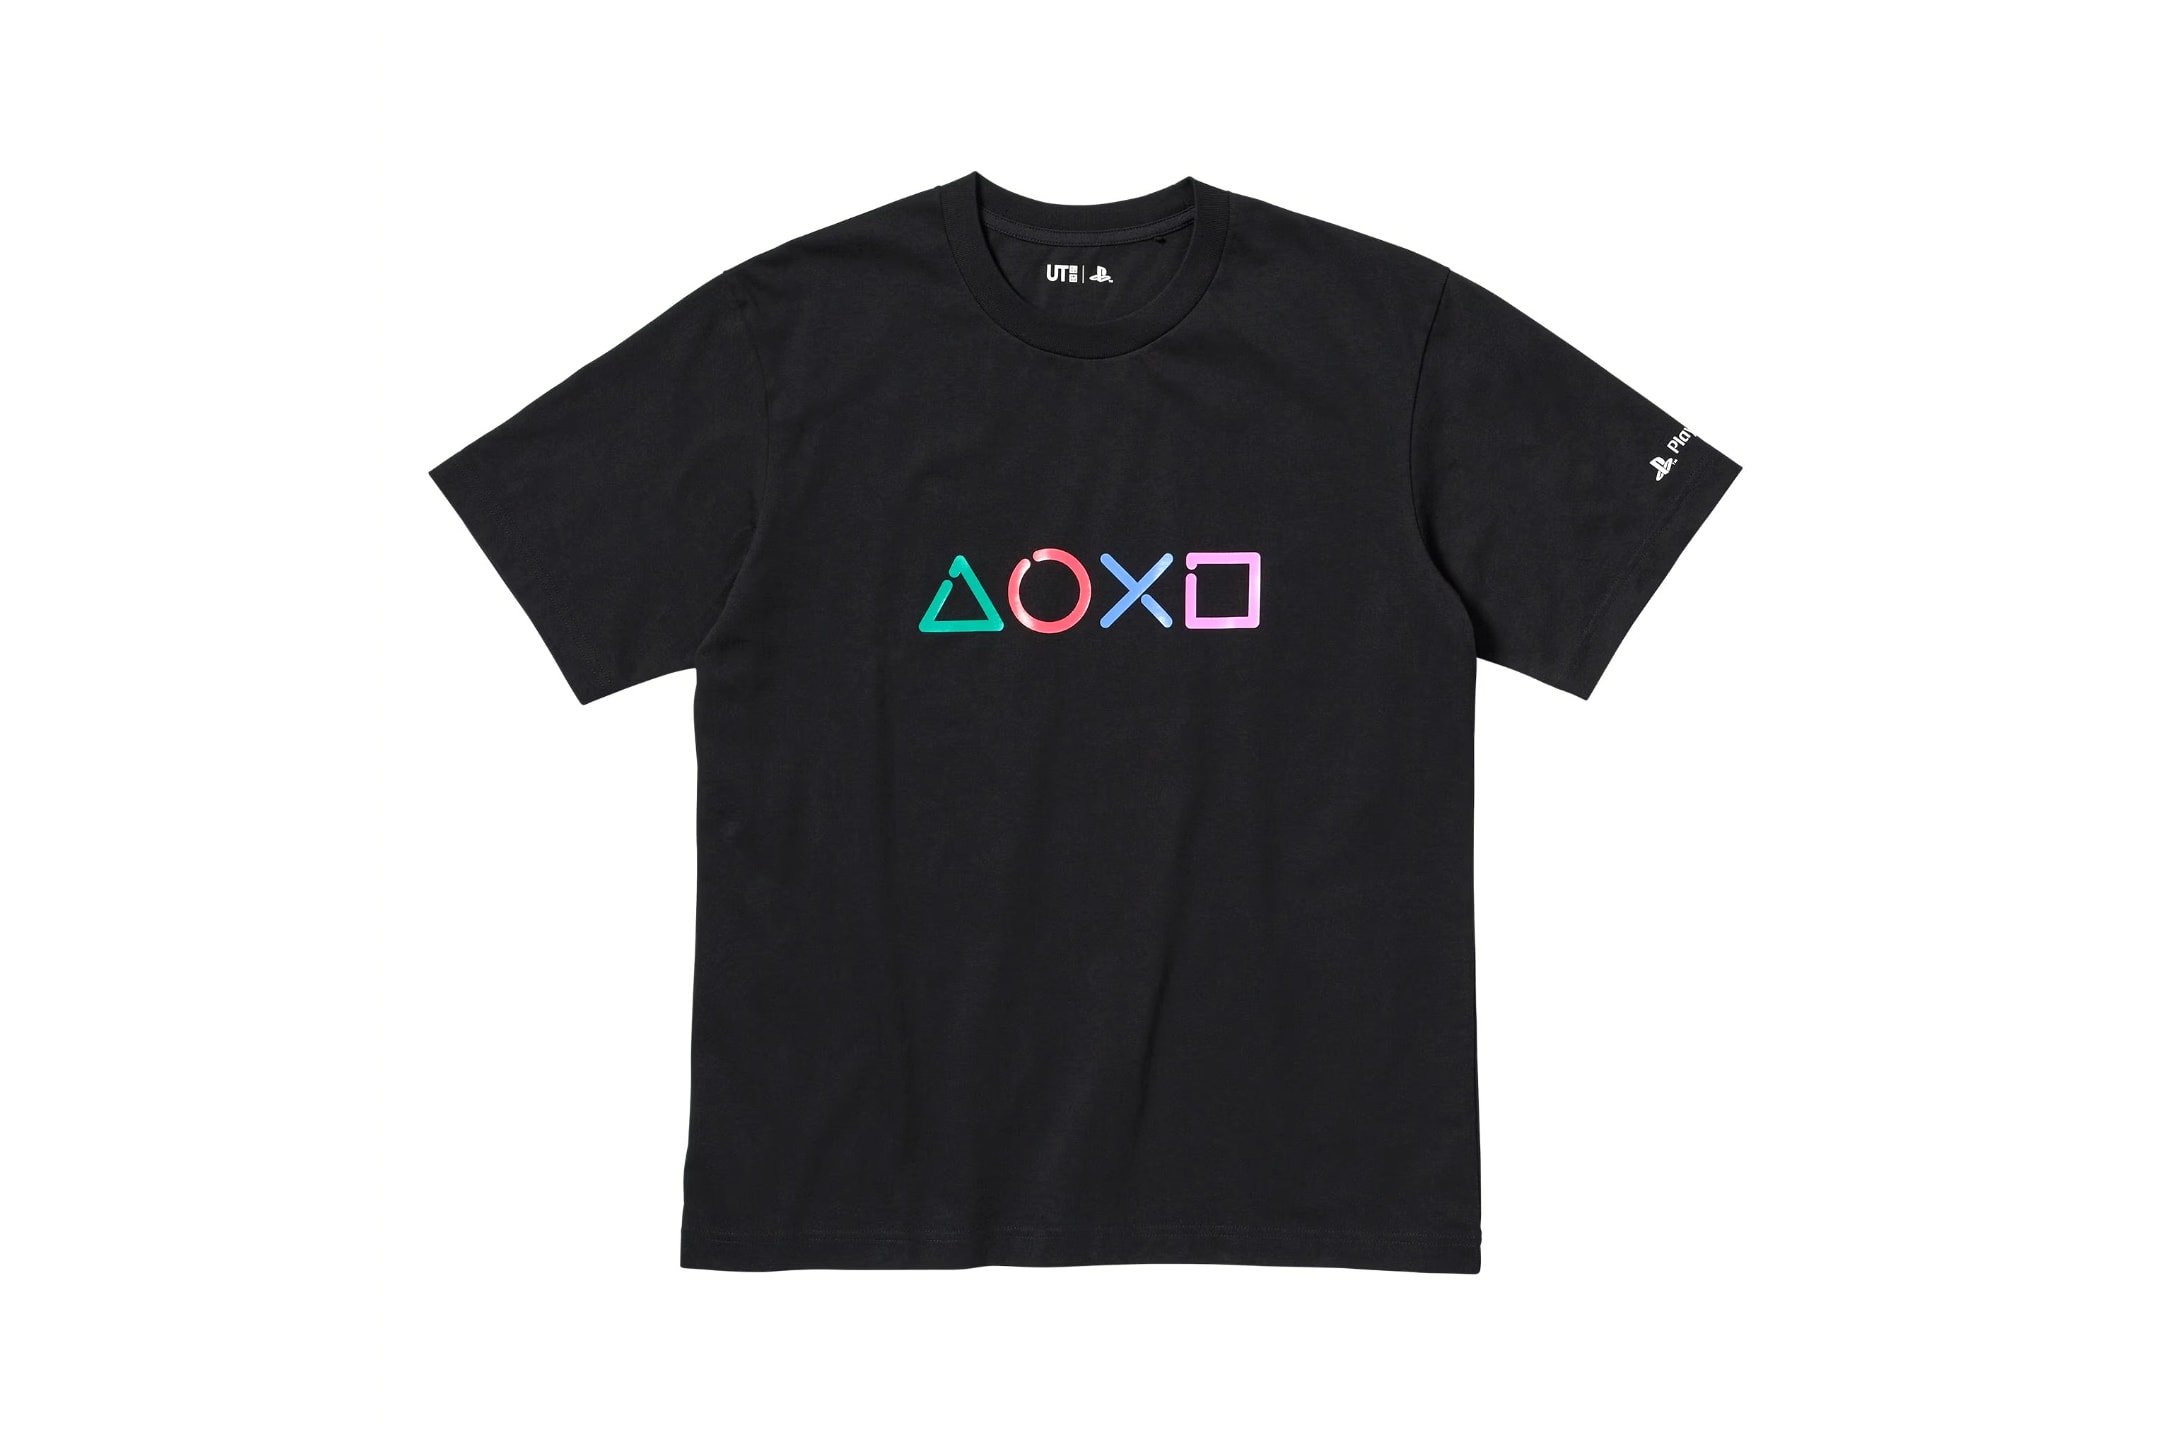 UNIQLO UT PlayStation T-shirt collection retro gaming shirts Japan PS5 PSone 